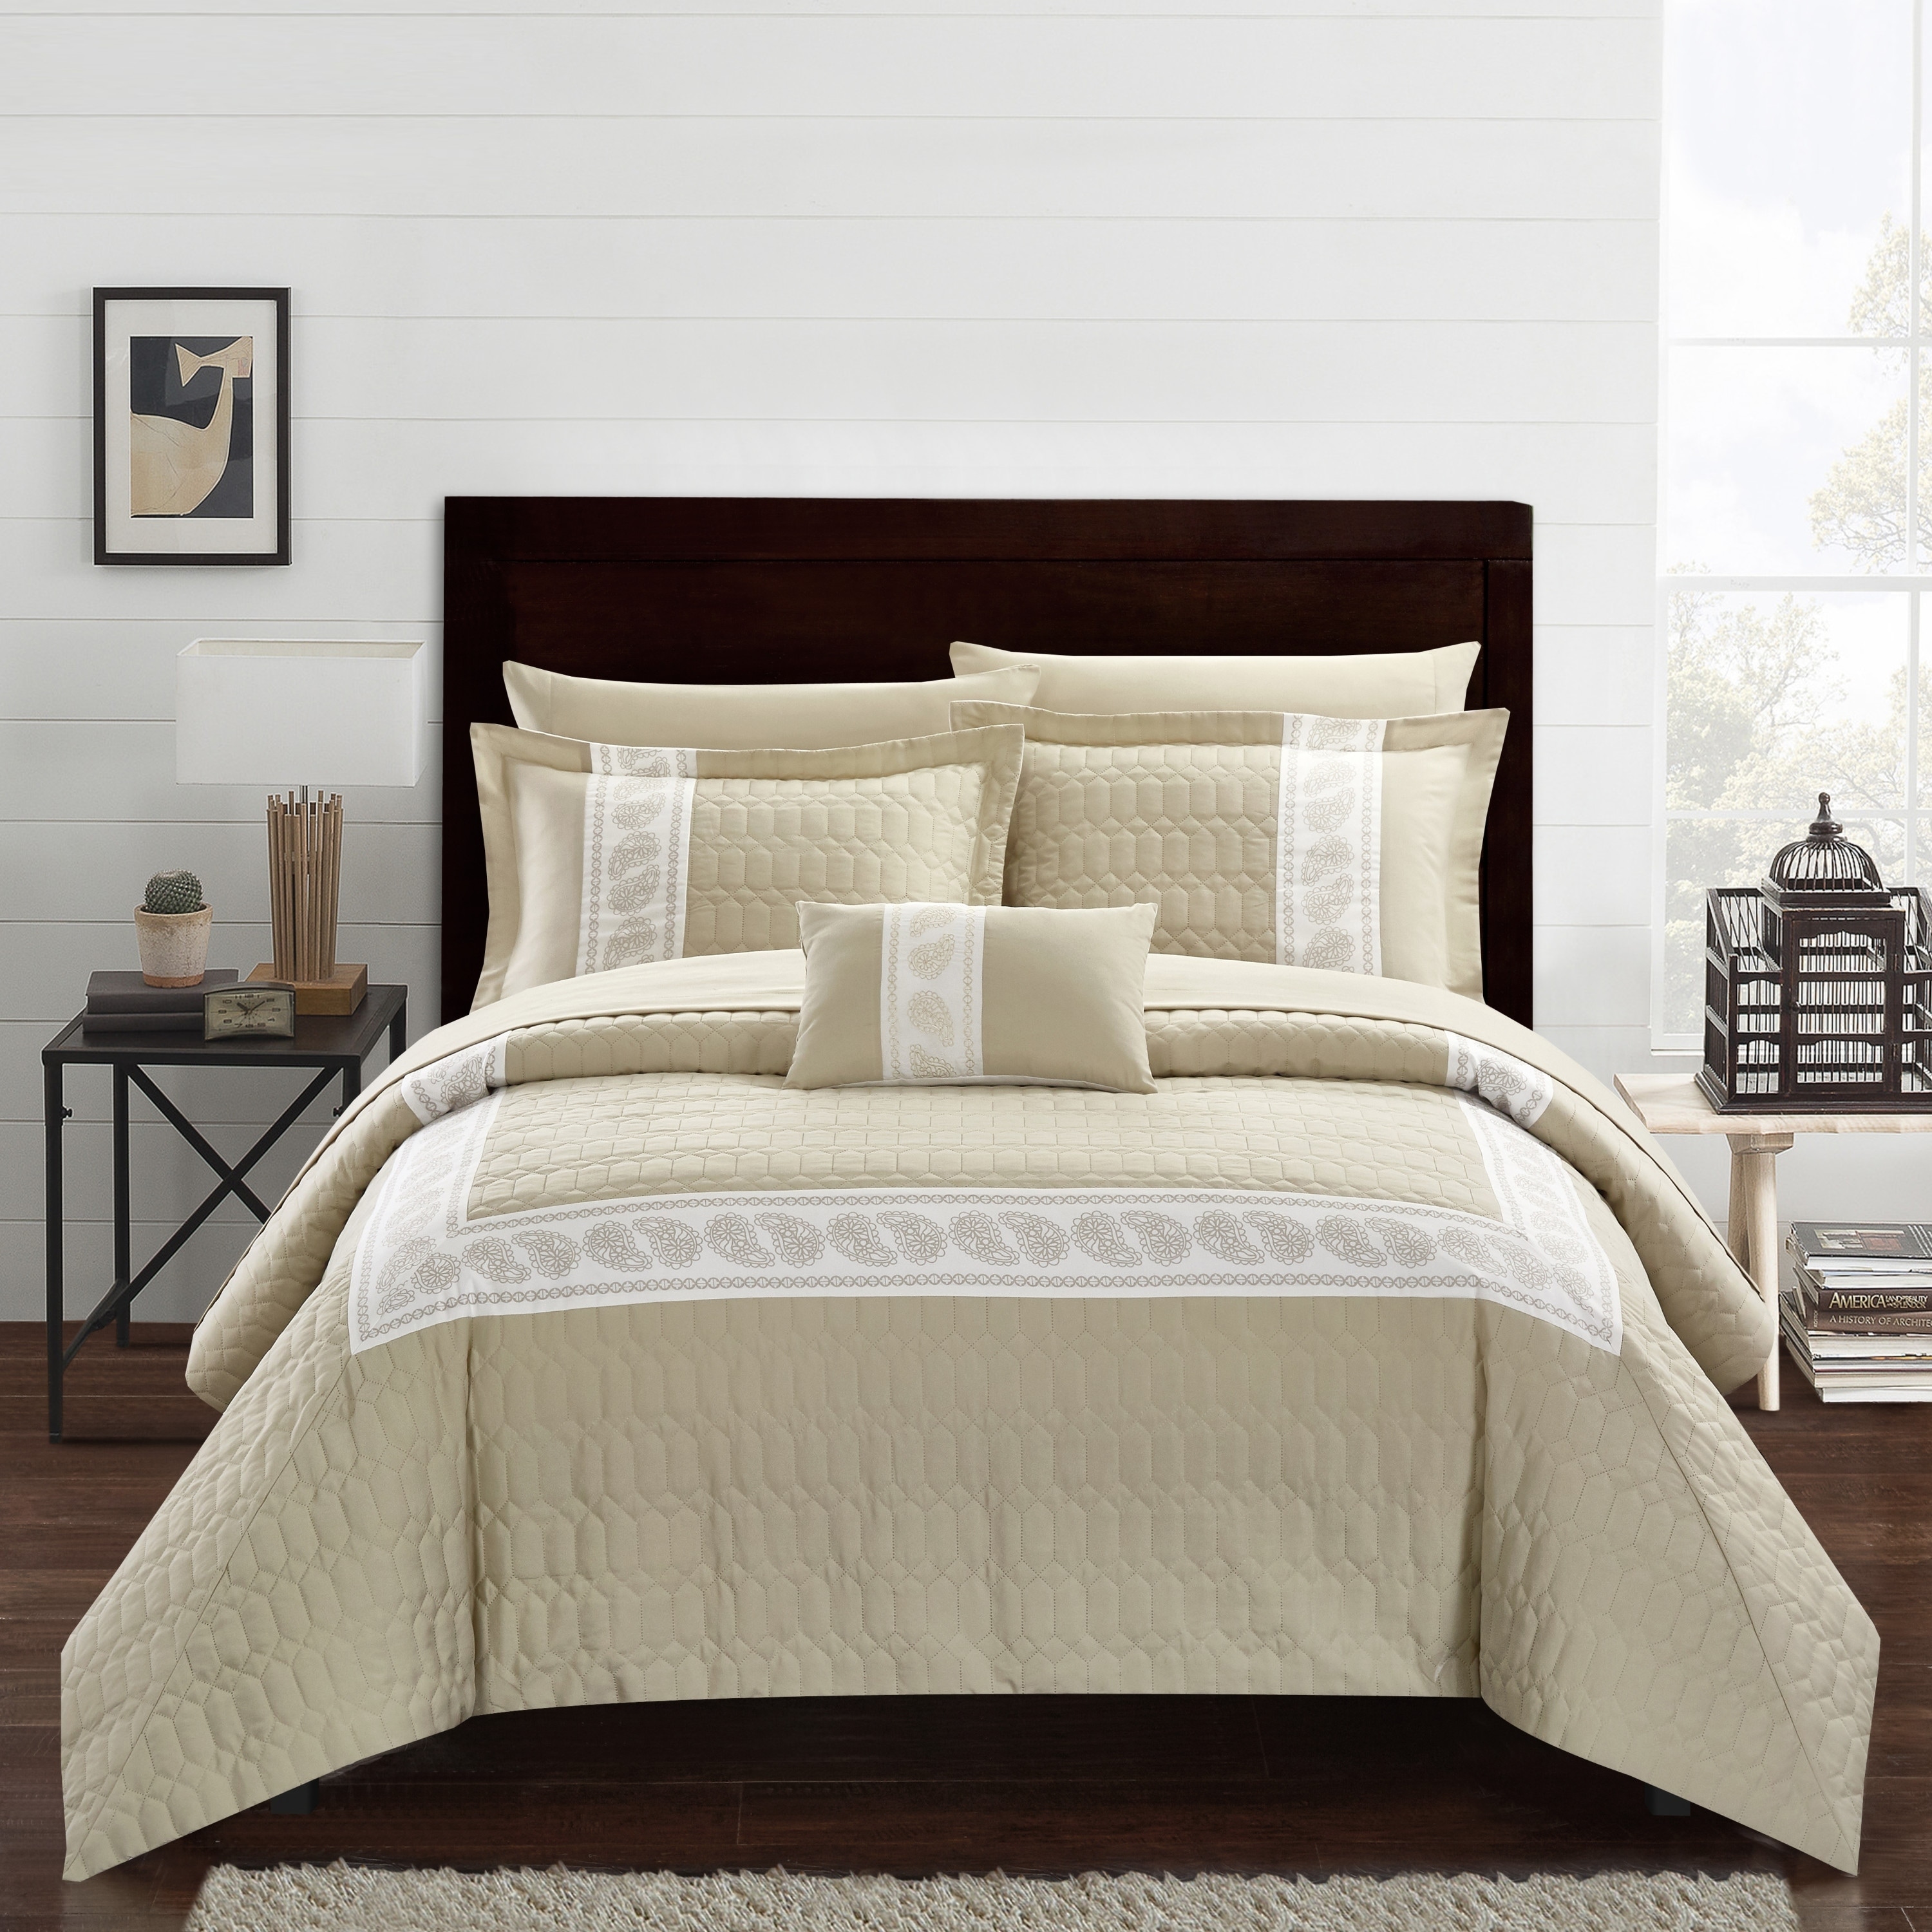 Comforter. Sobrecama - Queen - household items - by owner